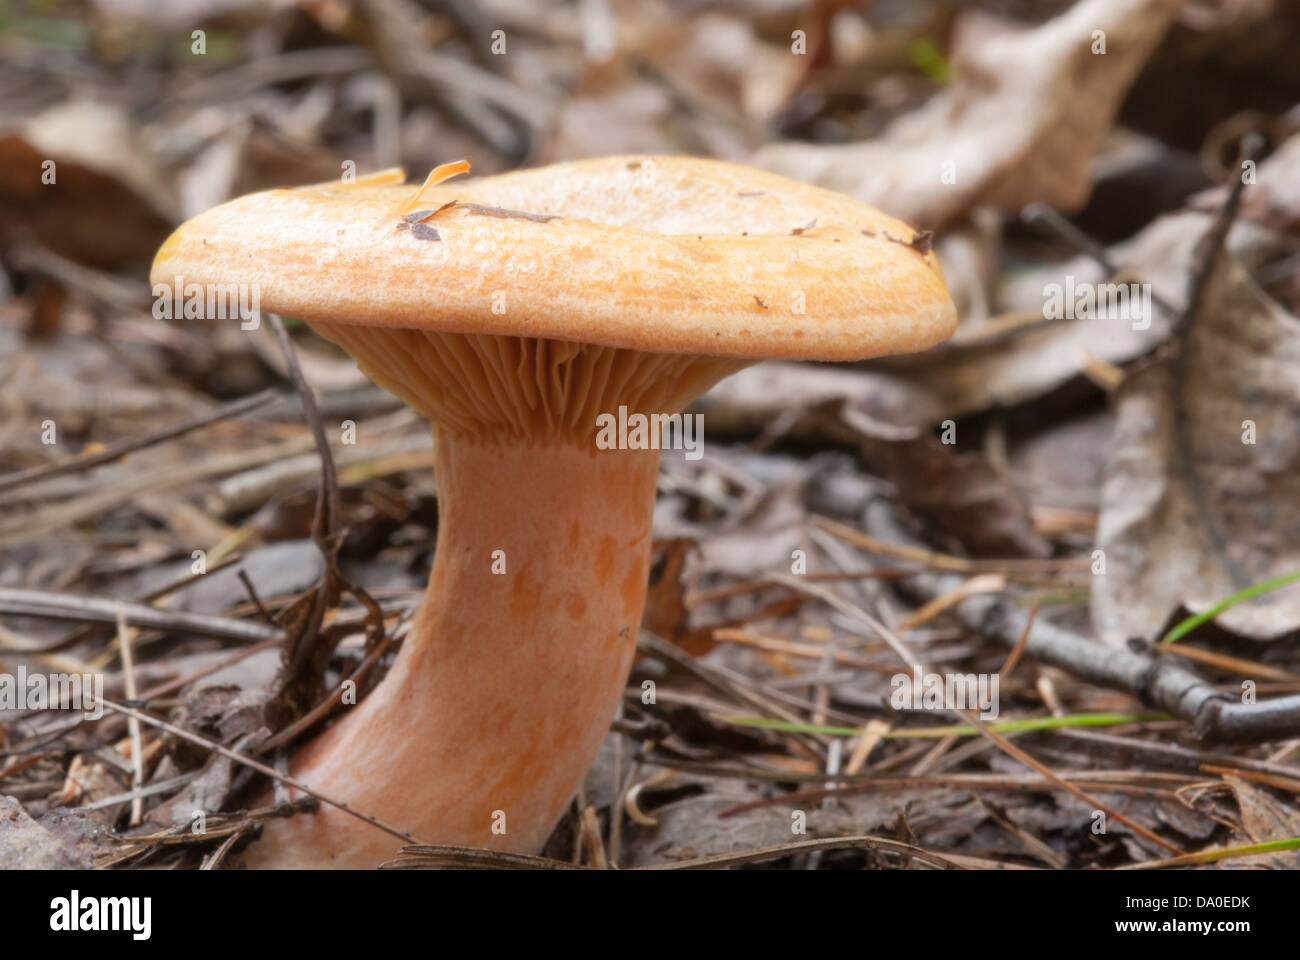 Delicious milkcap (Lactarus deliciosus) growing among fallen leaves and pine needles, Brockville Ontario Stock Photo